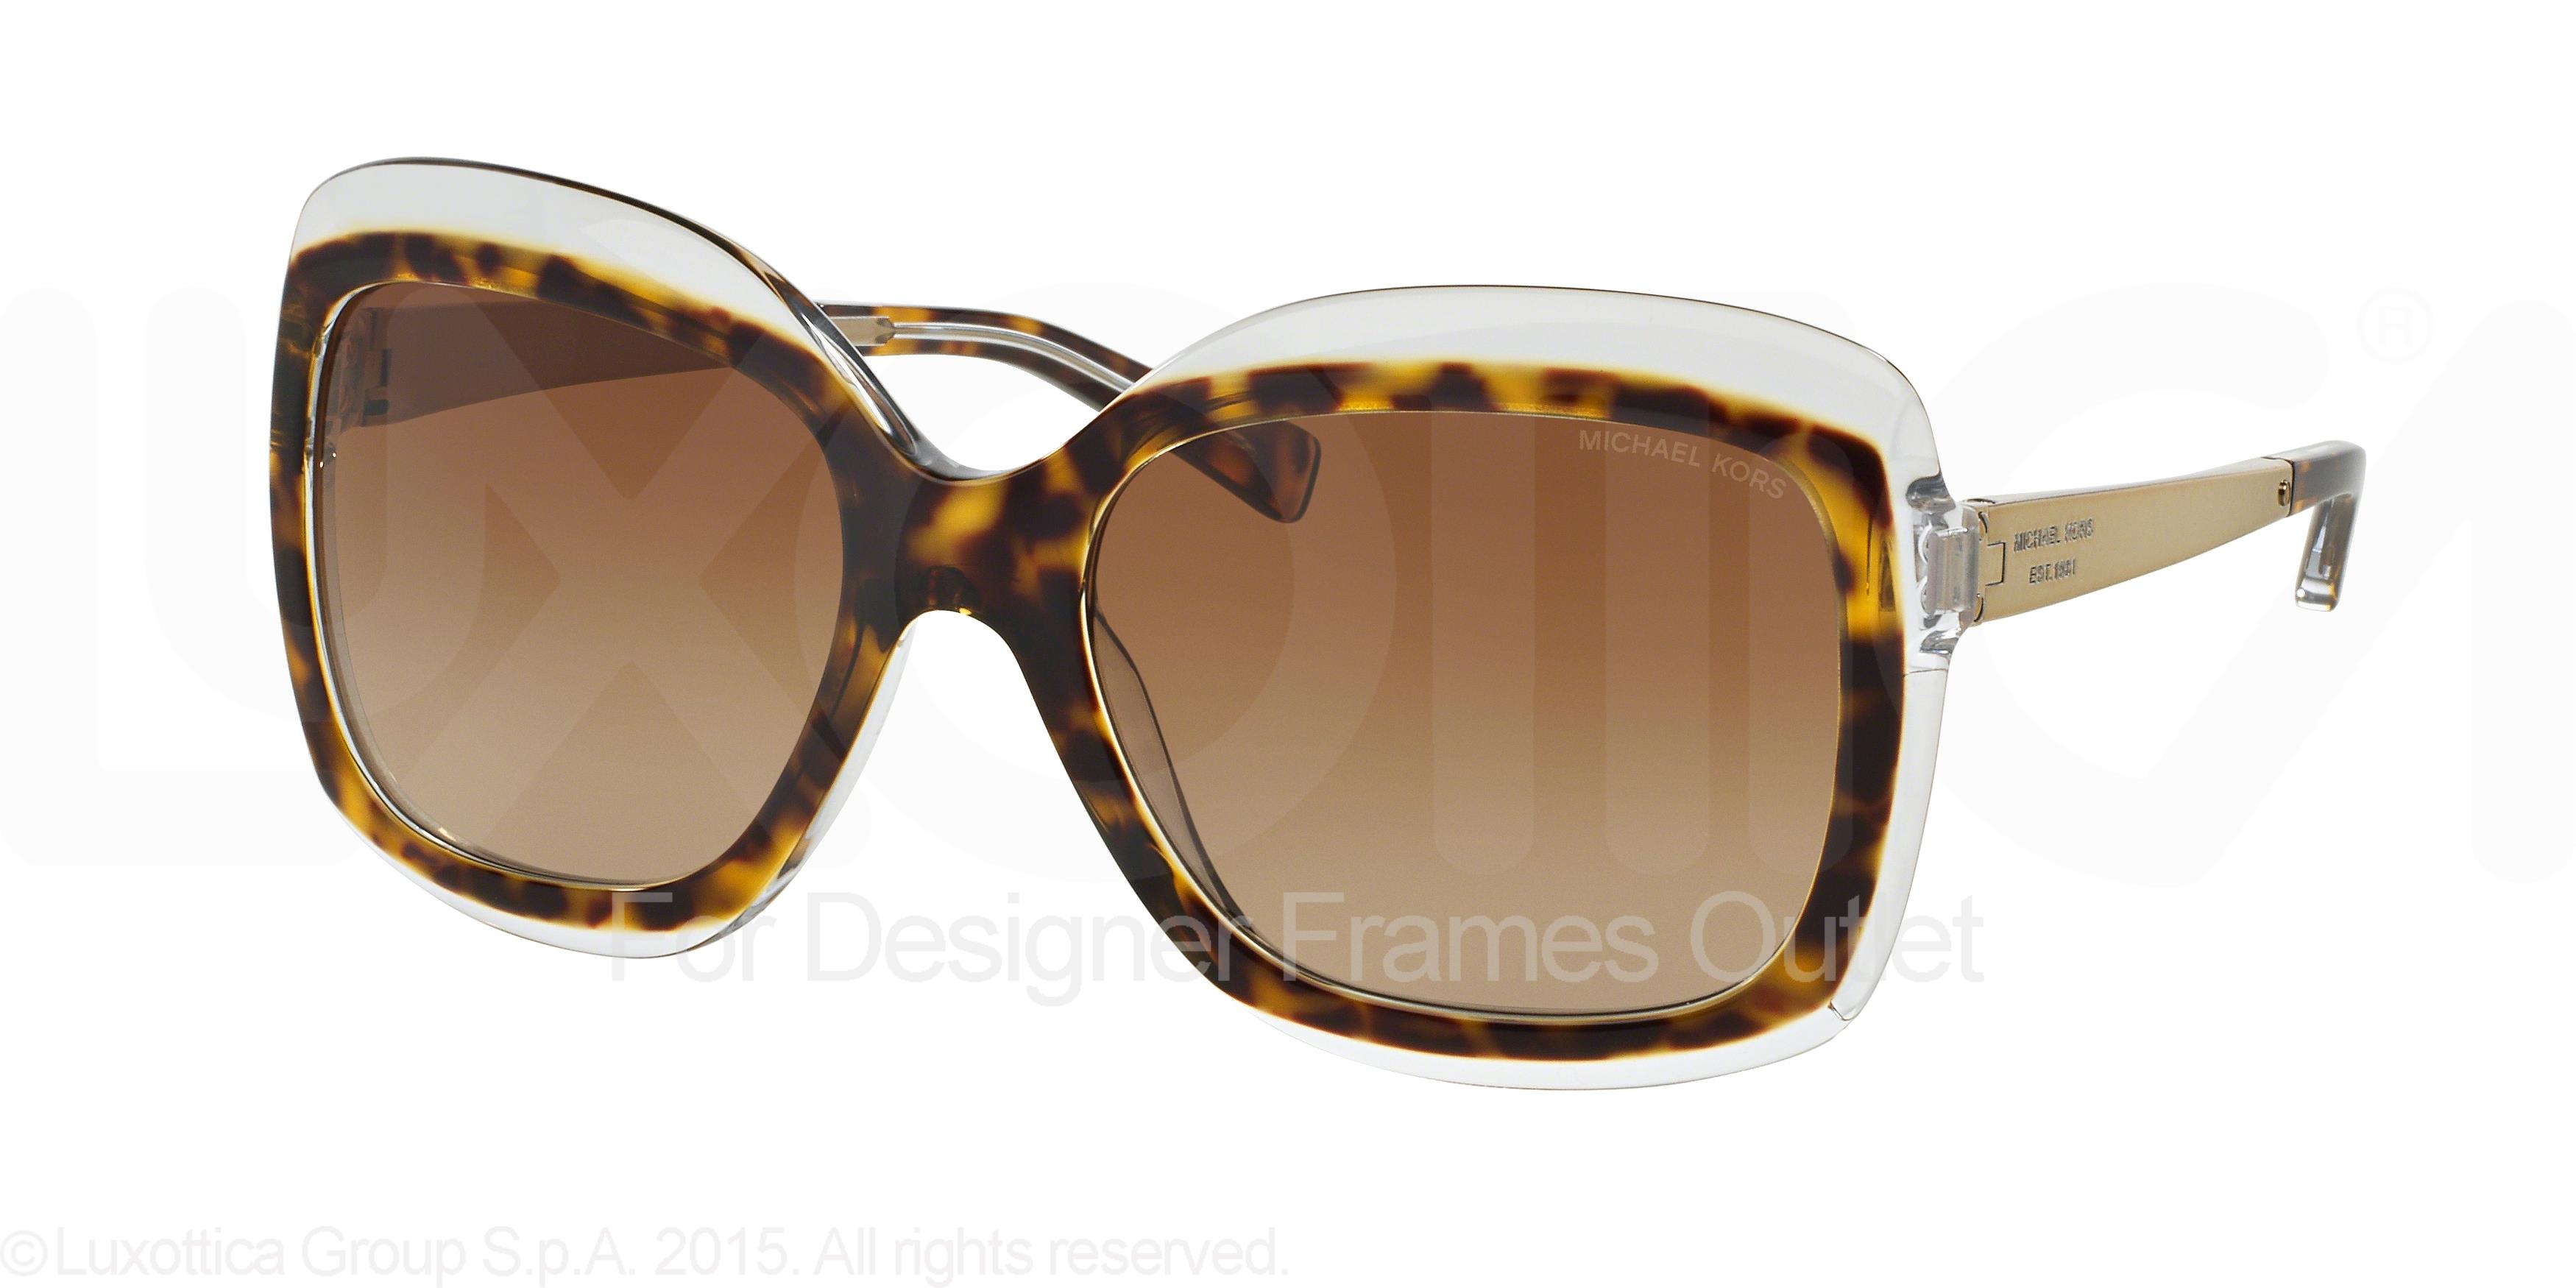 Picture of Michael Kors Sunglasses MK2007